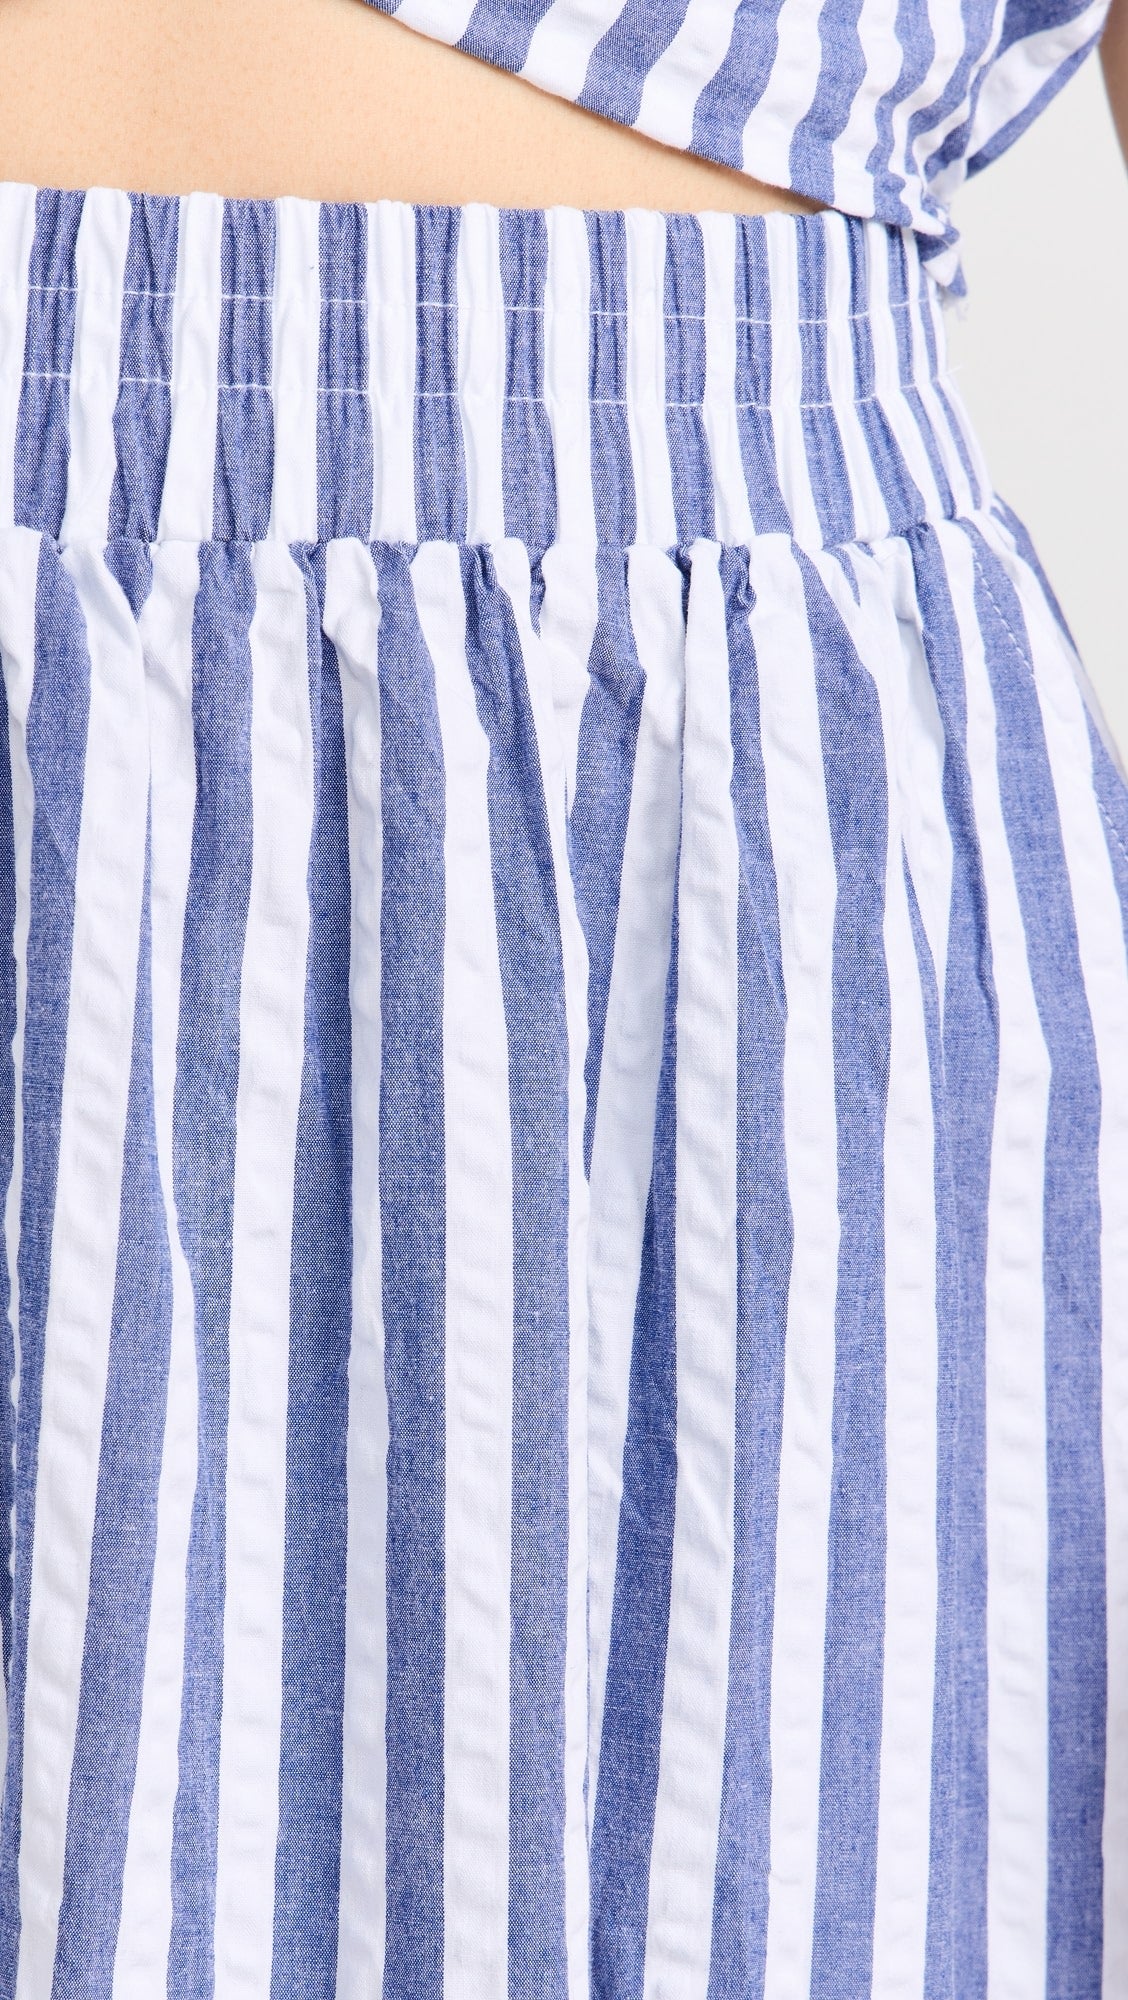 Stateside Puckered Stripe Double Slit Maxi Skirt 5458